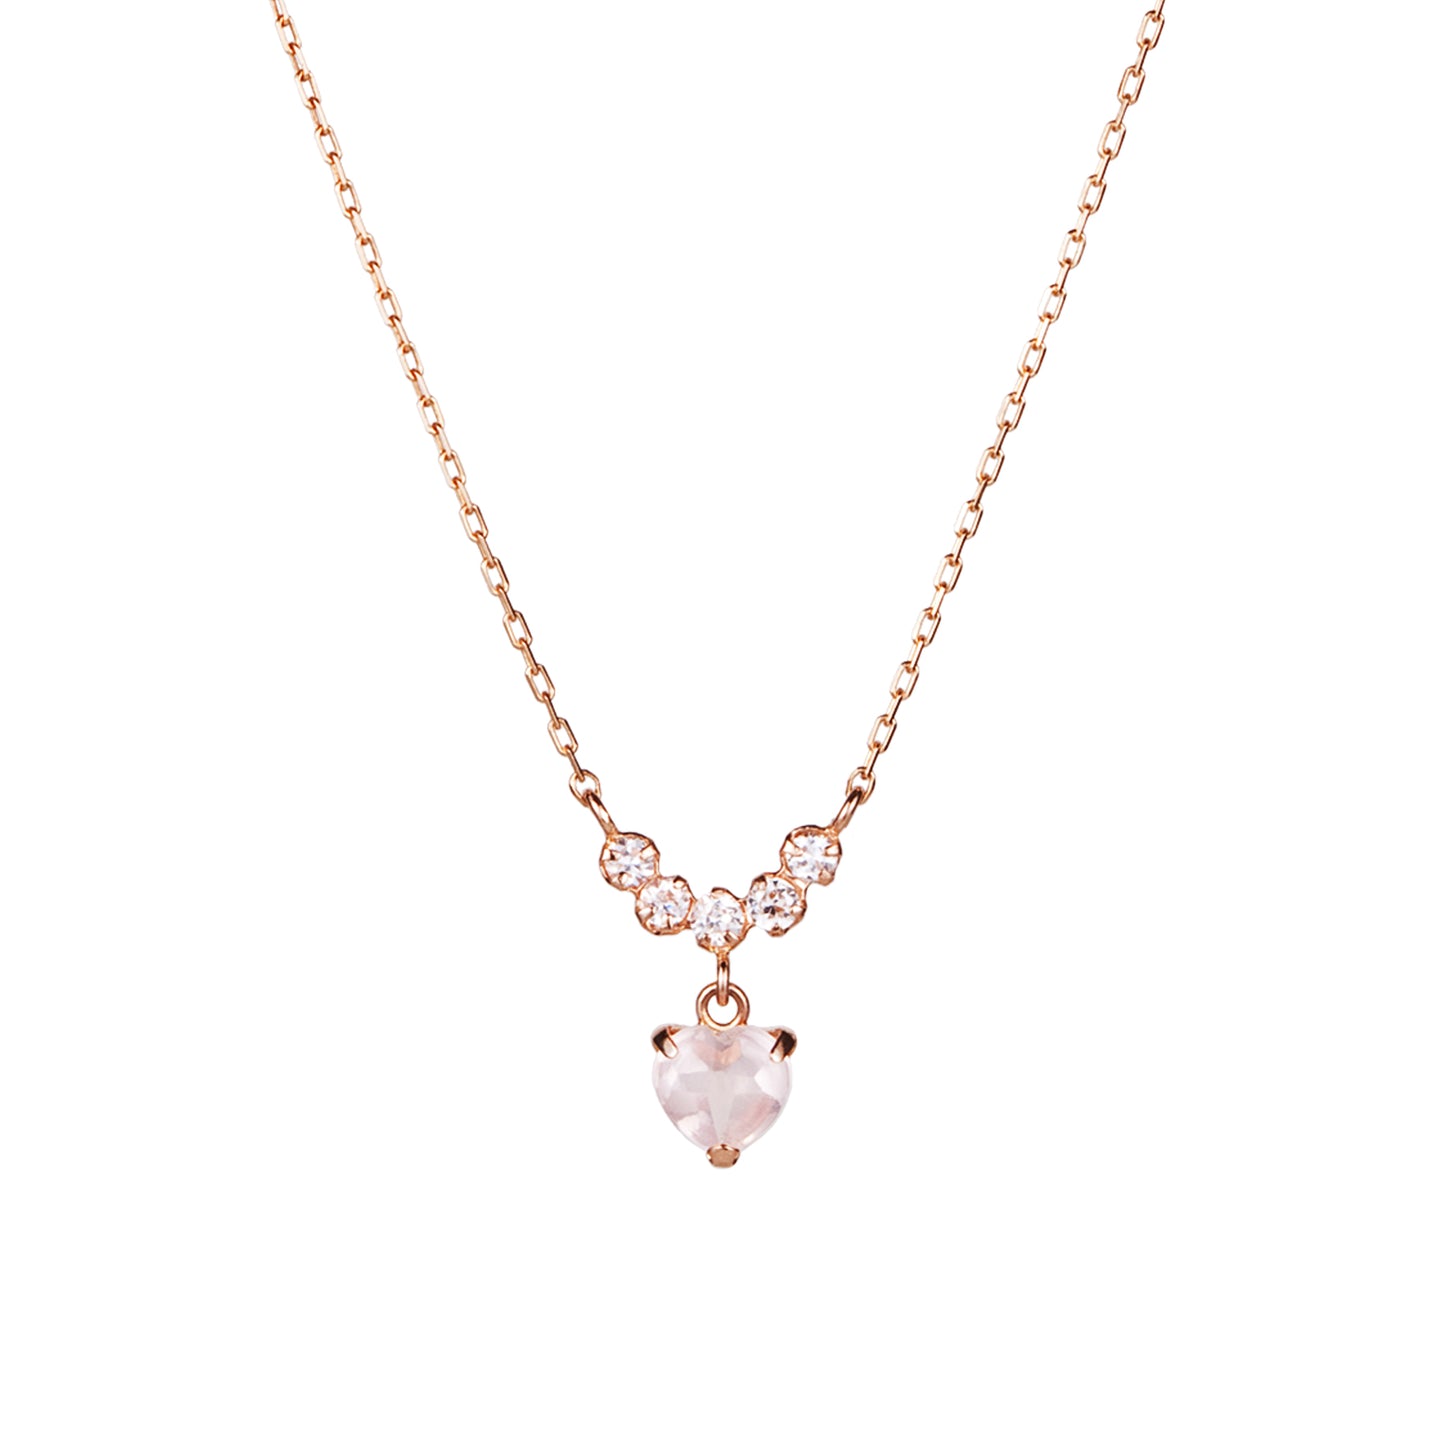 Rose Quartz Heart Necklace (10K Rose Gold) - Product Image